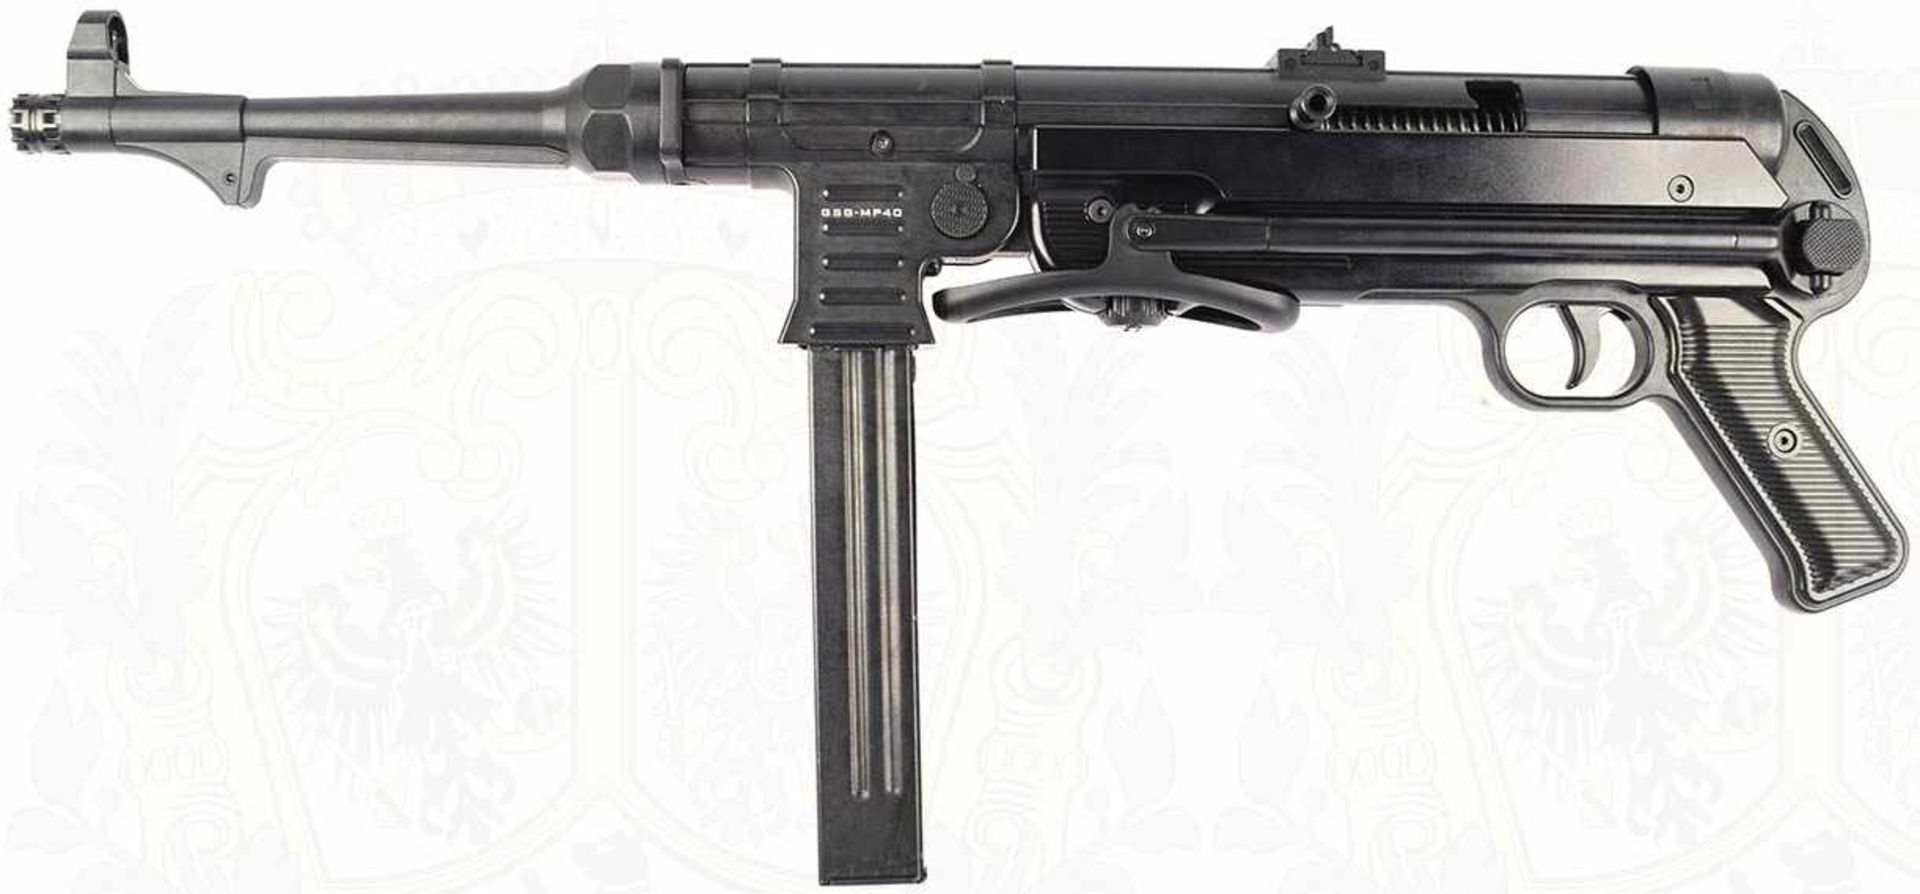 SELBSLADEBÜCHSE GSG MP 40, Kaliber 9x19mm, Hersteller GSG Made in Germany, Serien-Nr. A 761976, - Image 8 of 12